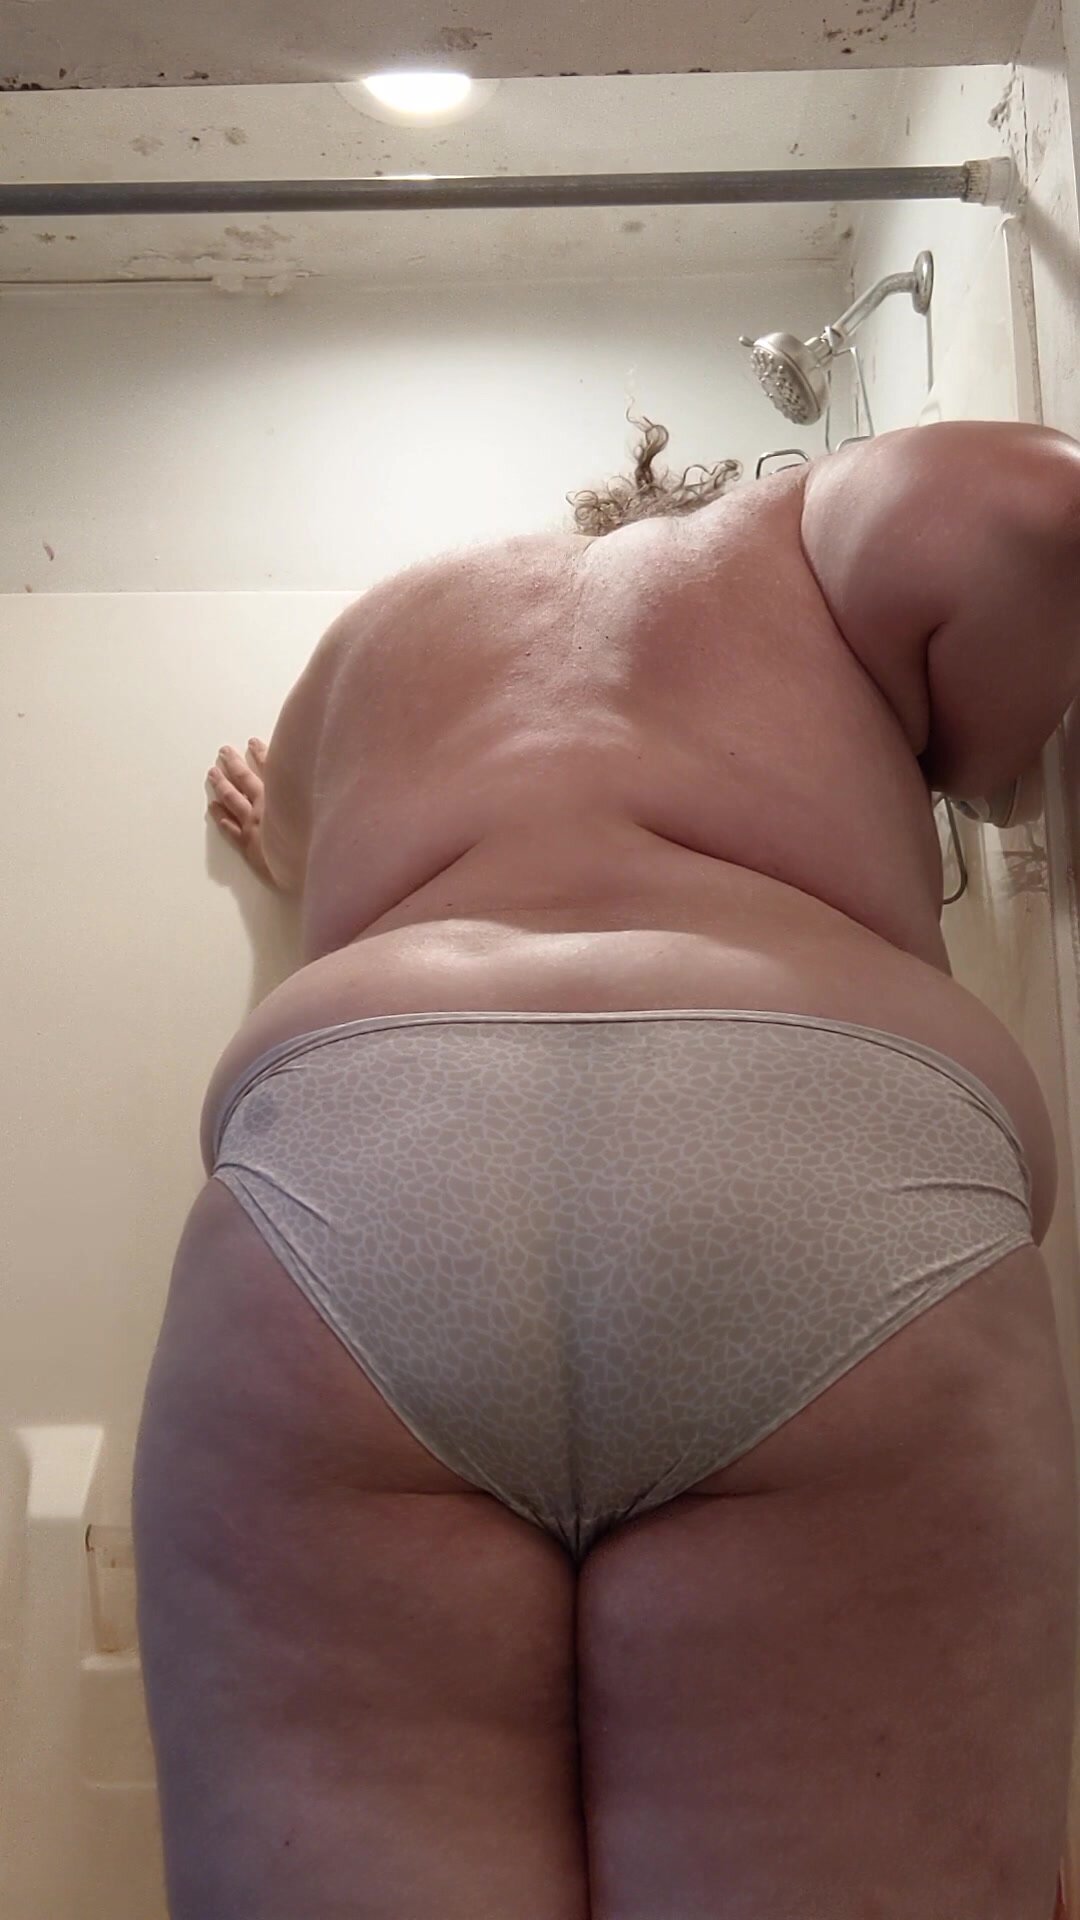 Fat boy shitting panties 2